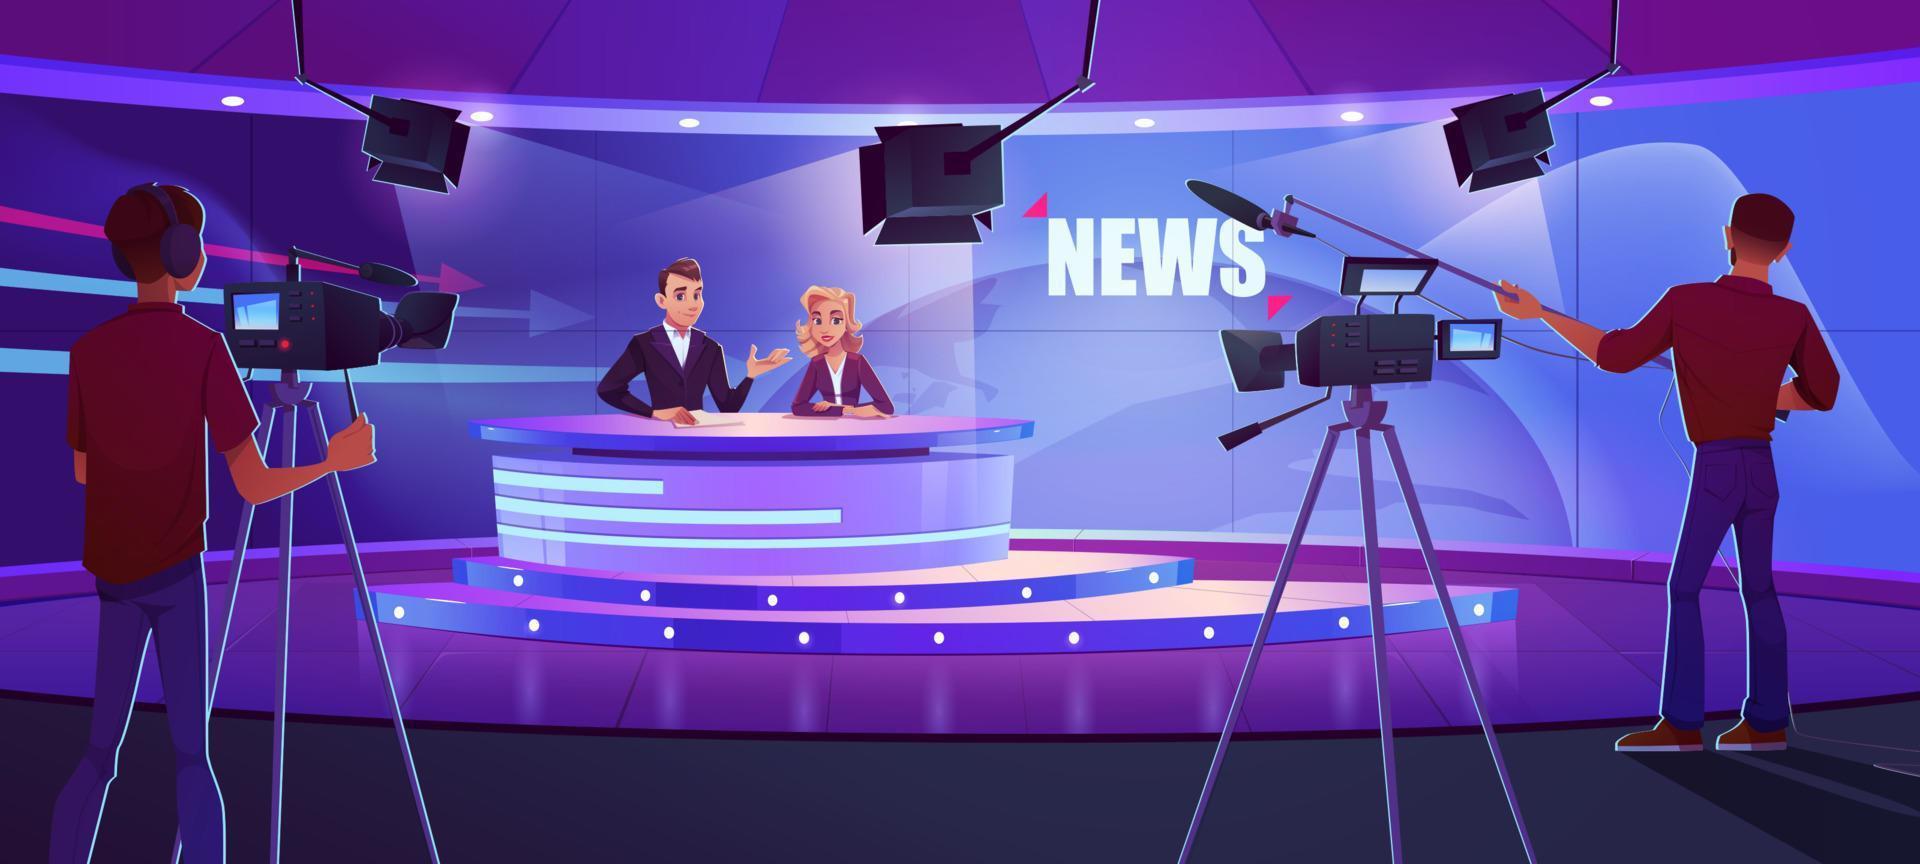 Tv presenters broadcasting news in modern studio vector